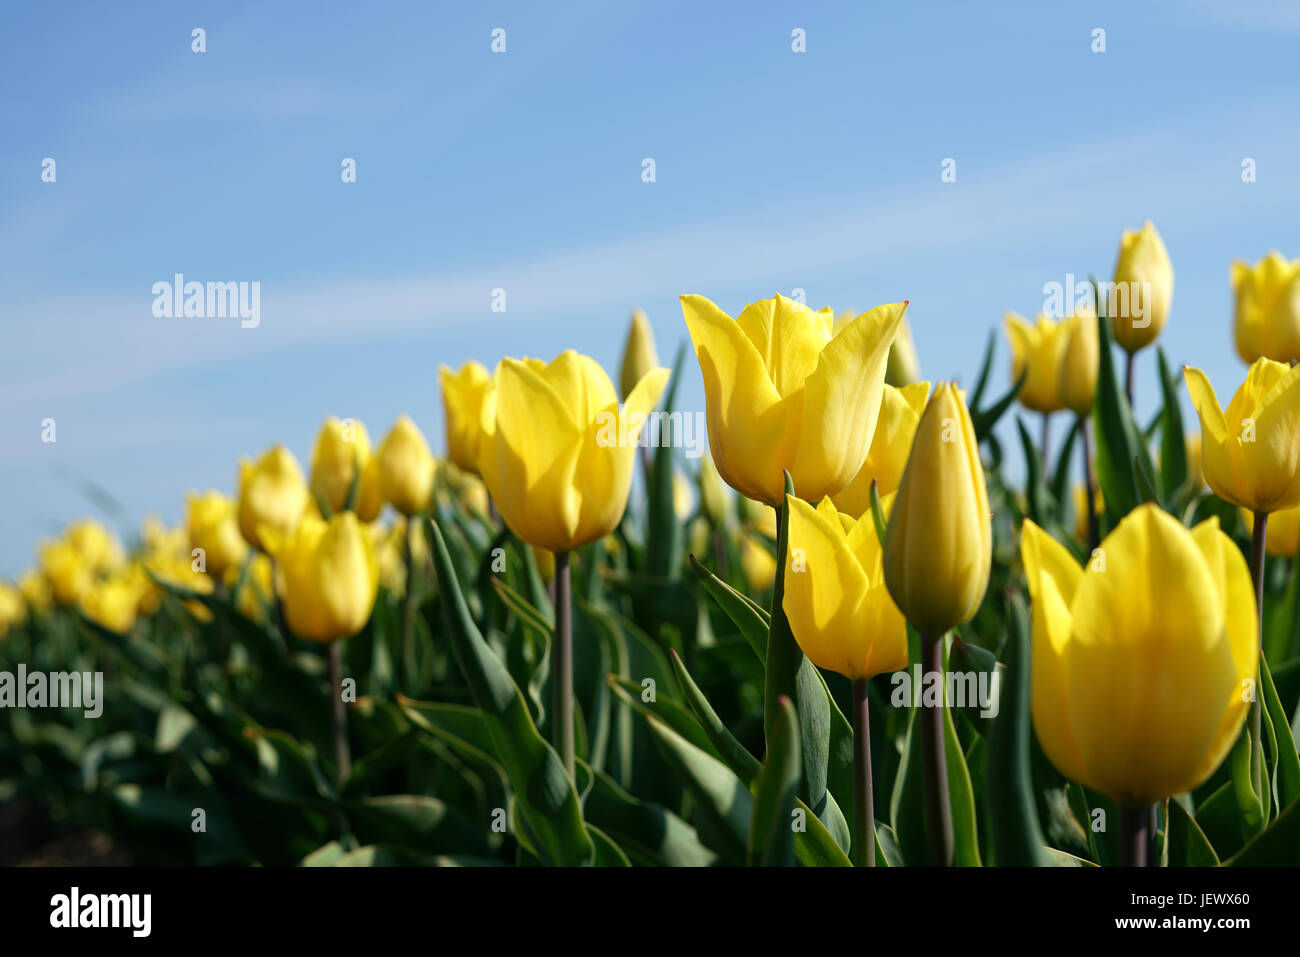 flowering tulips in a field Stock Photo